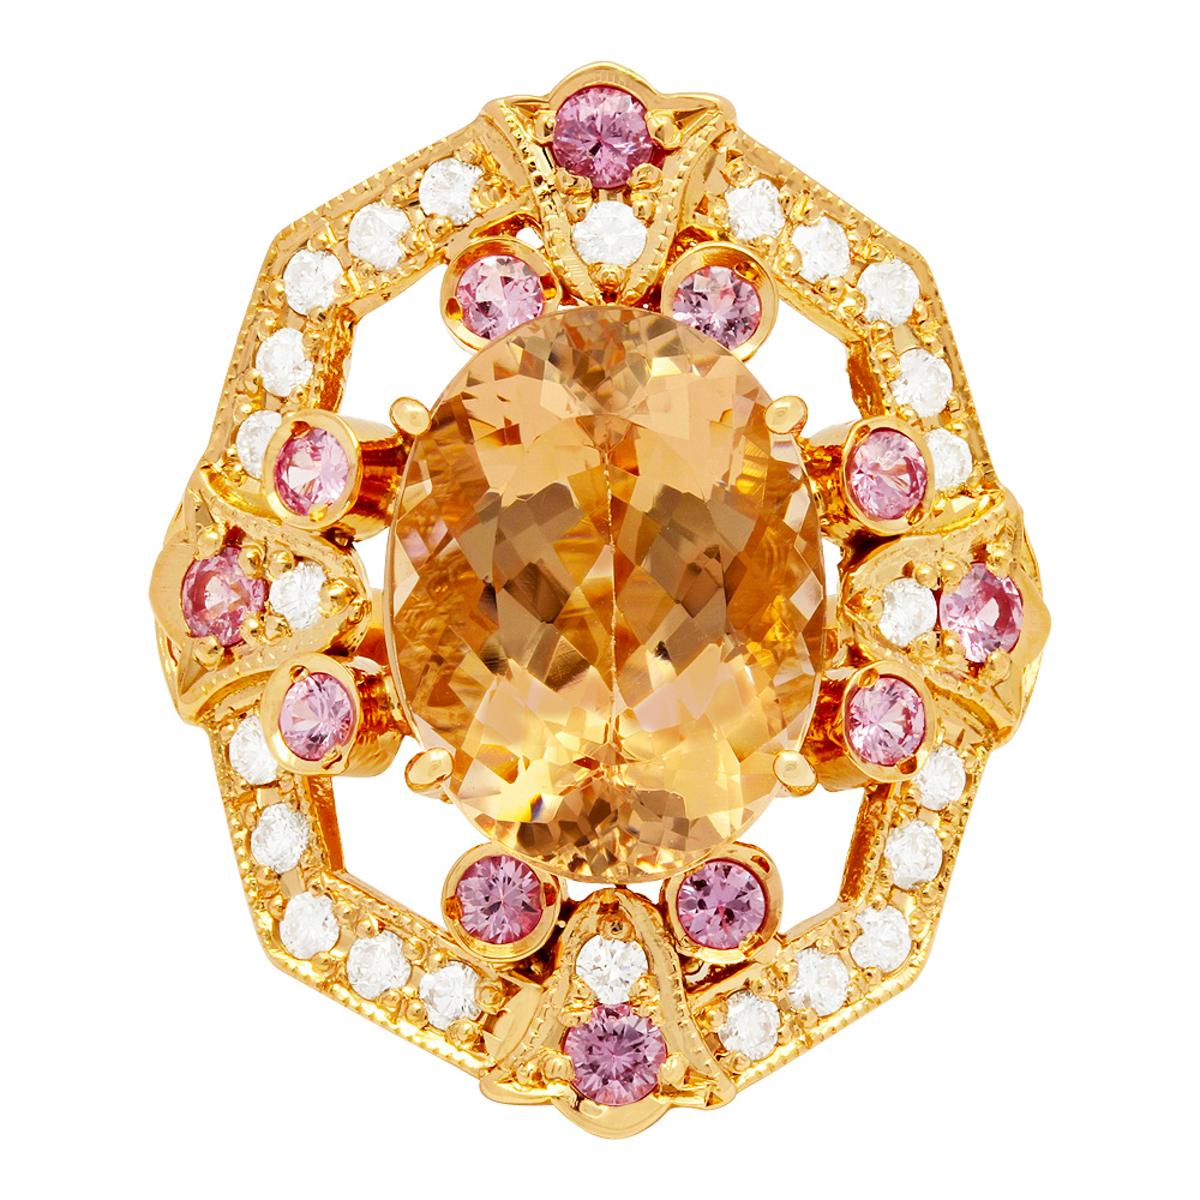 14k Rose Gold 7.27ct Morganite 0.75ct Pink Sapphire 0.59ct Diamond Ring